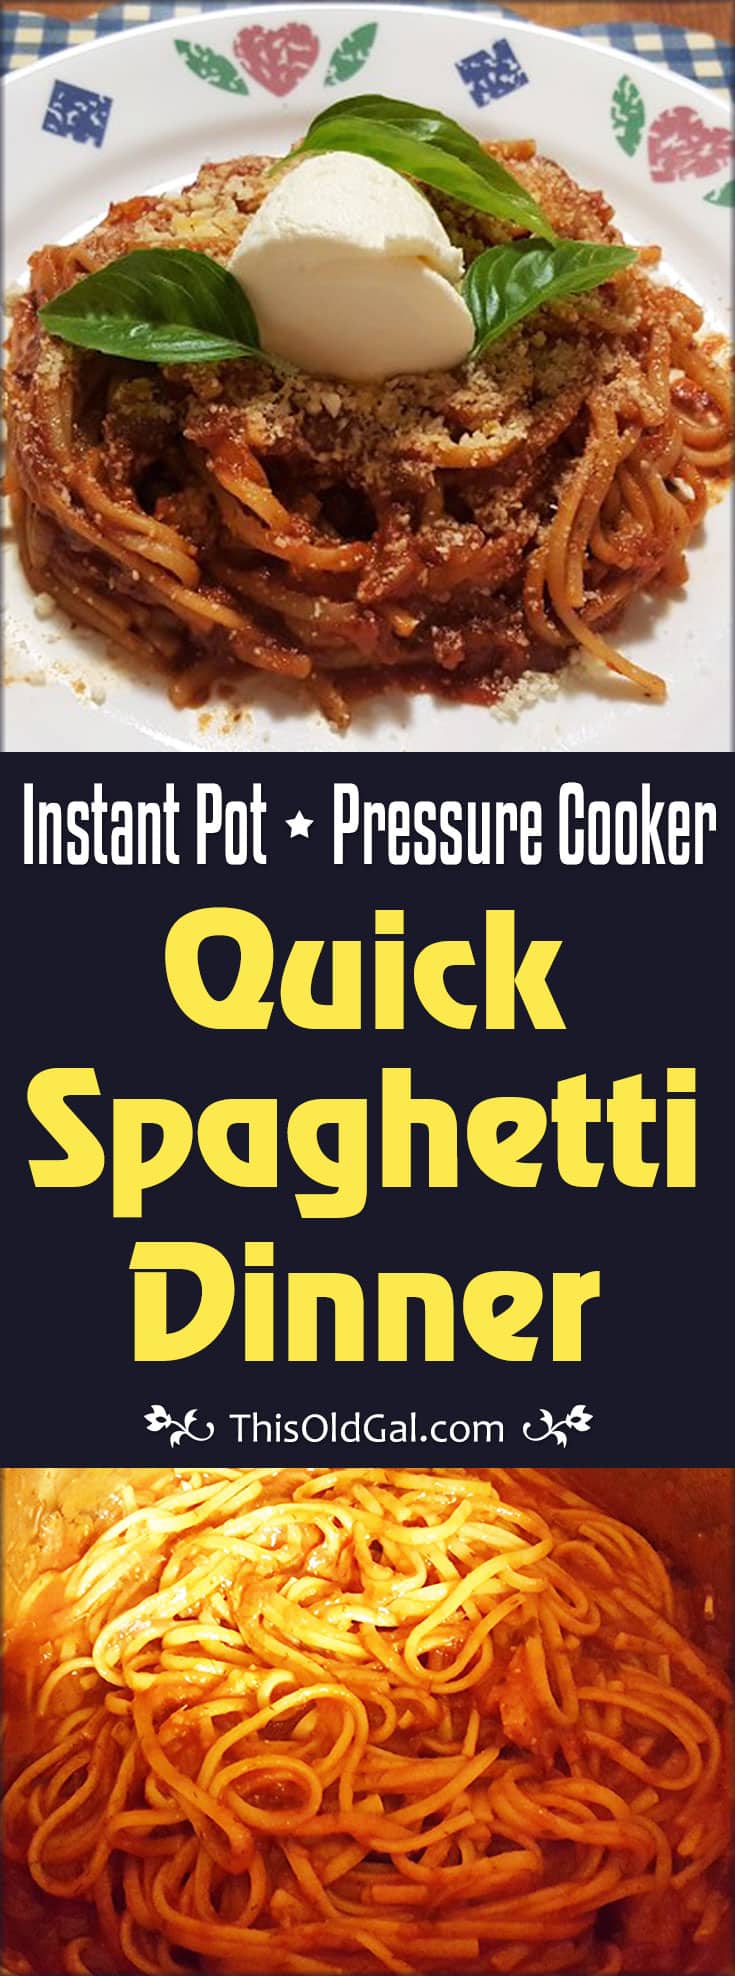 Instant Pot Pressure Cooker Quick Spaghetti Dinner